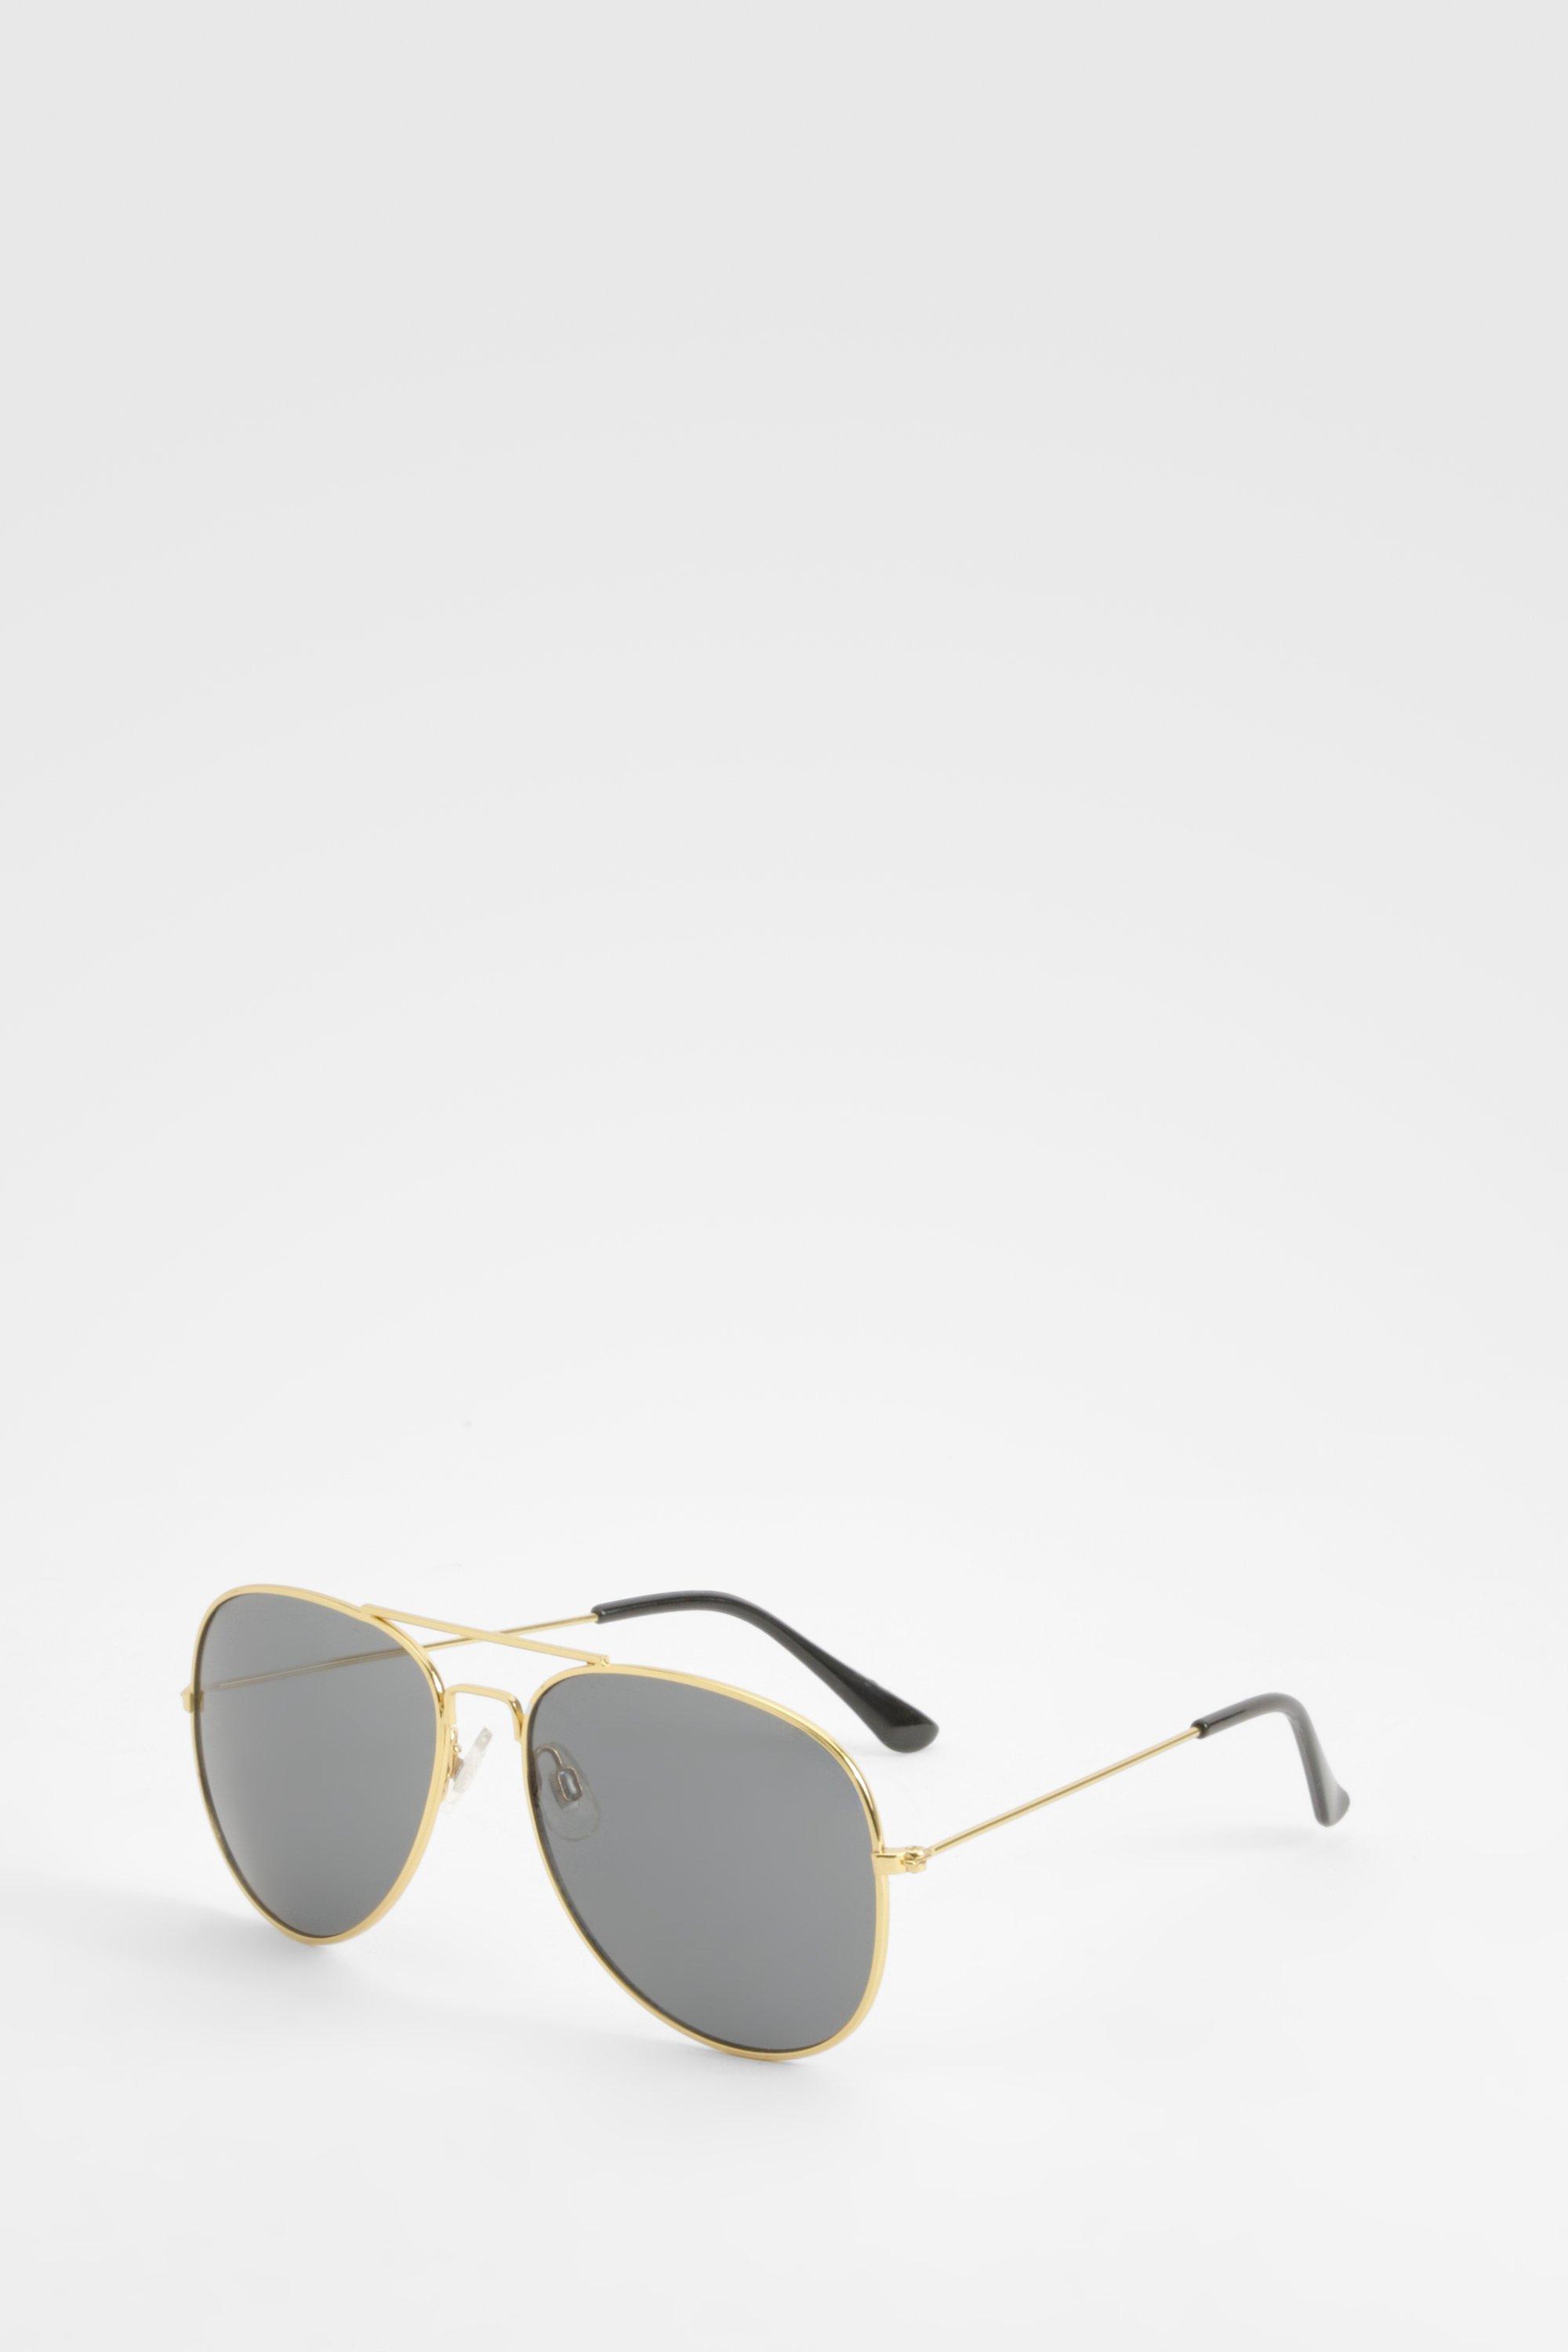 Image of Gold Frame Aviator Sunglasses, Metallics